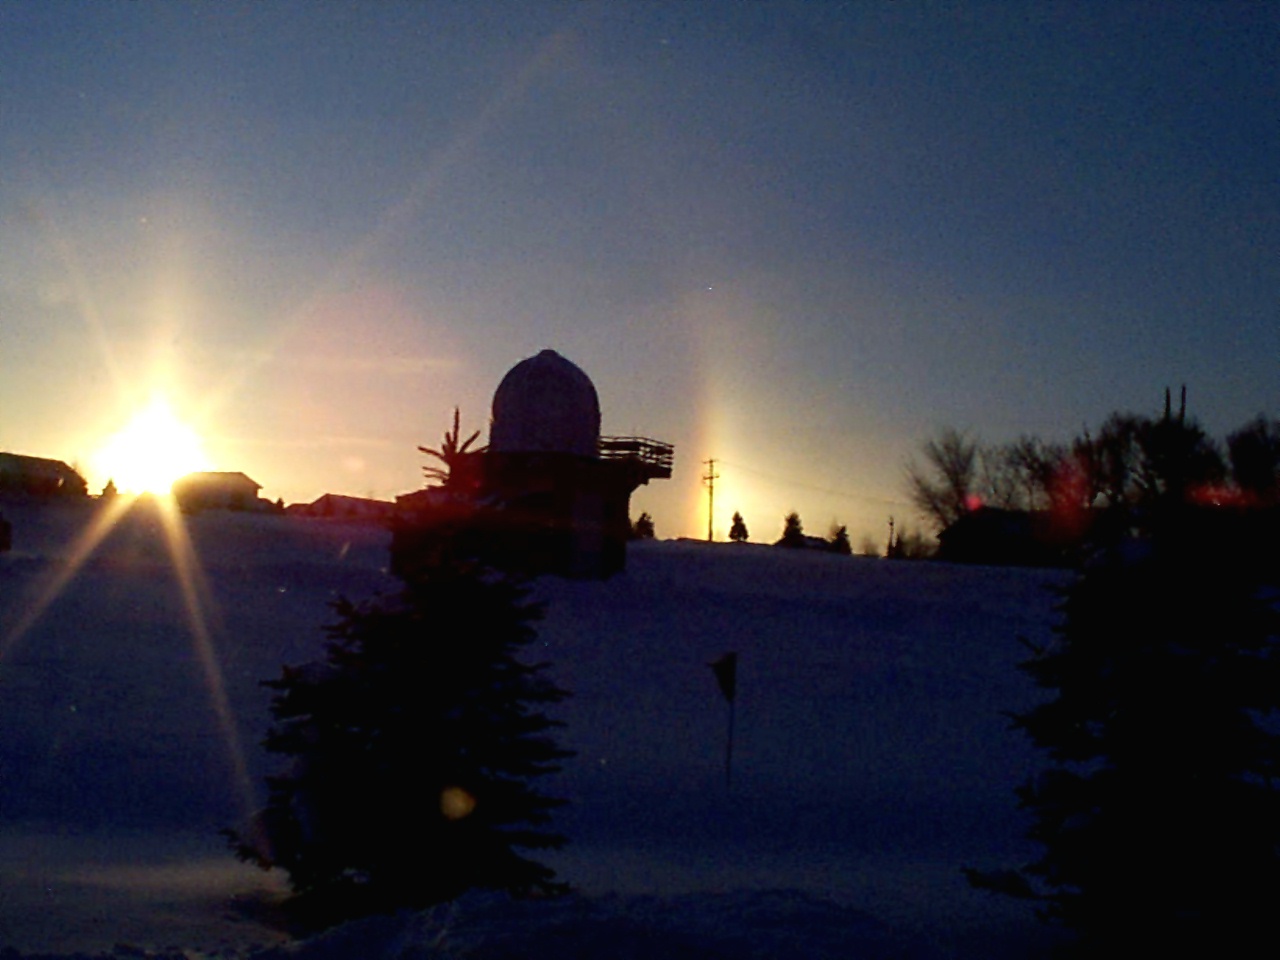 Winter solstice in Chanhassen, Minnesota - Right View